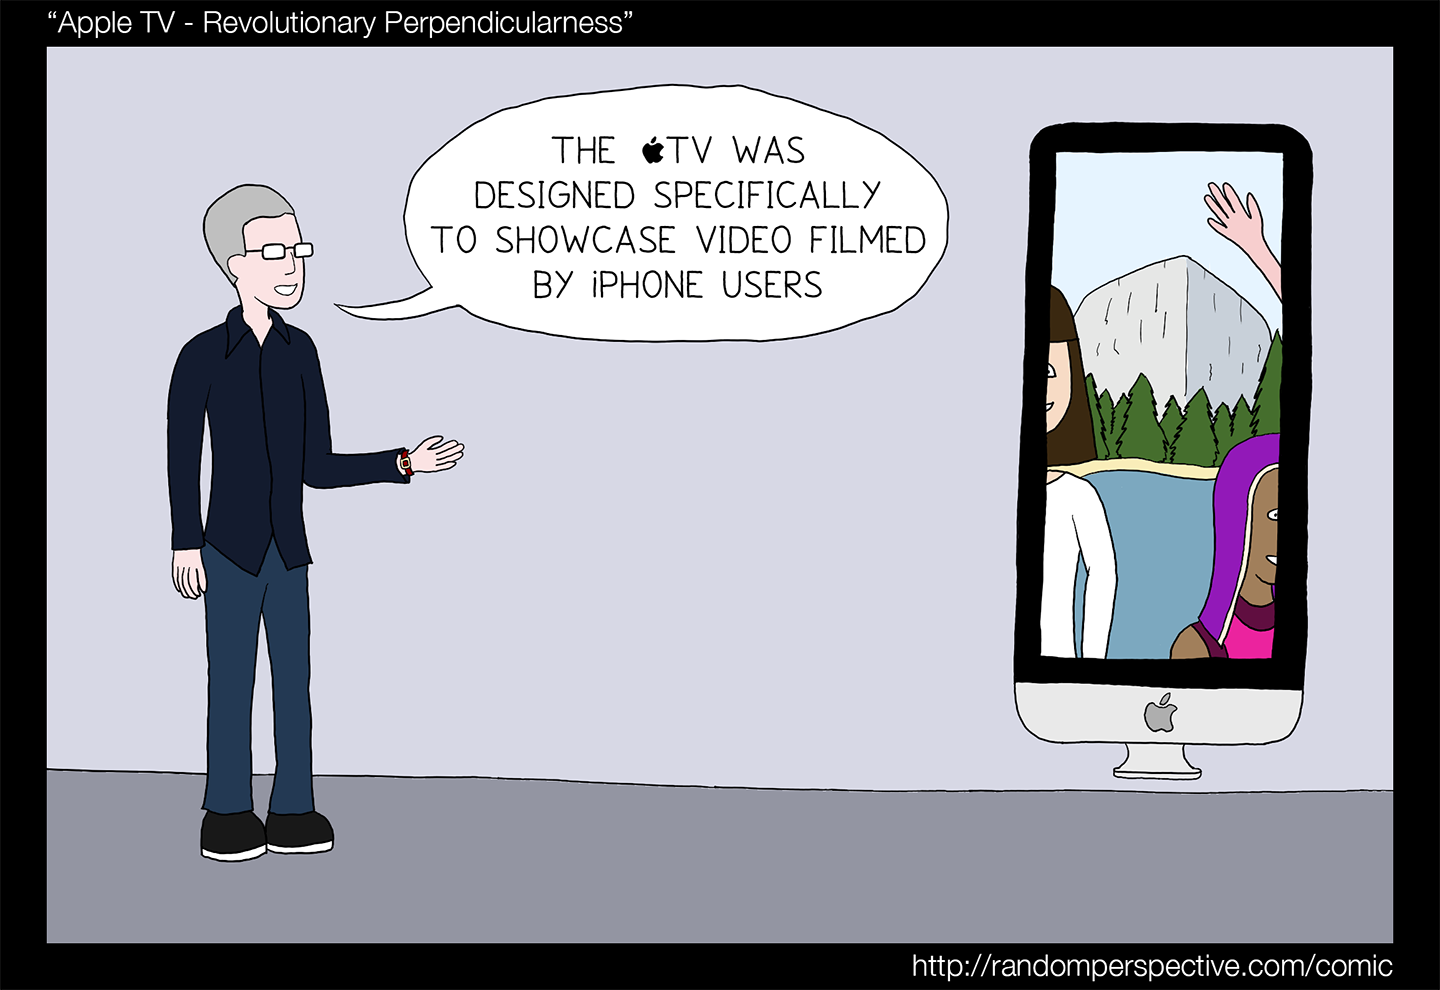 Apple TV - Revolutionary Perpendicularness